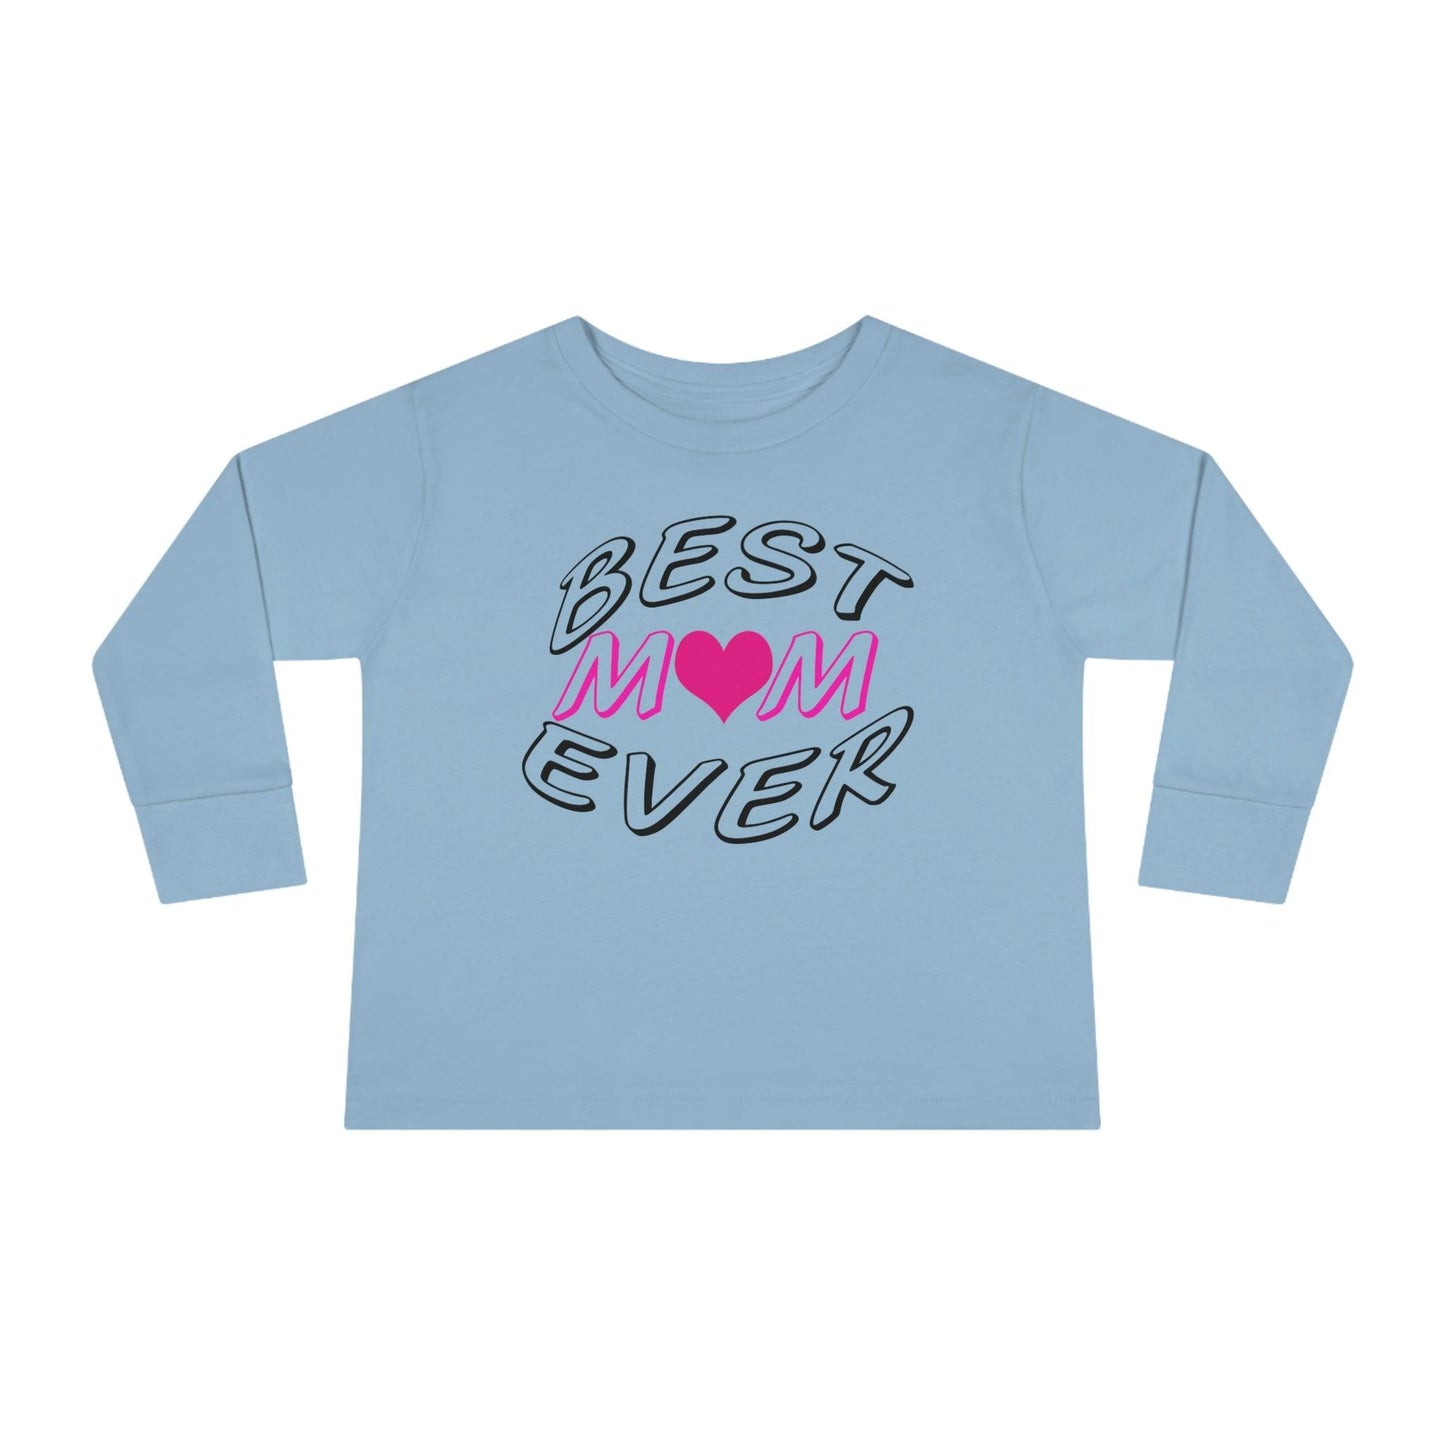 Best Mom Ever toddler long-sleeve tee - Toddler shirt